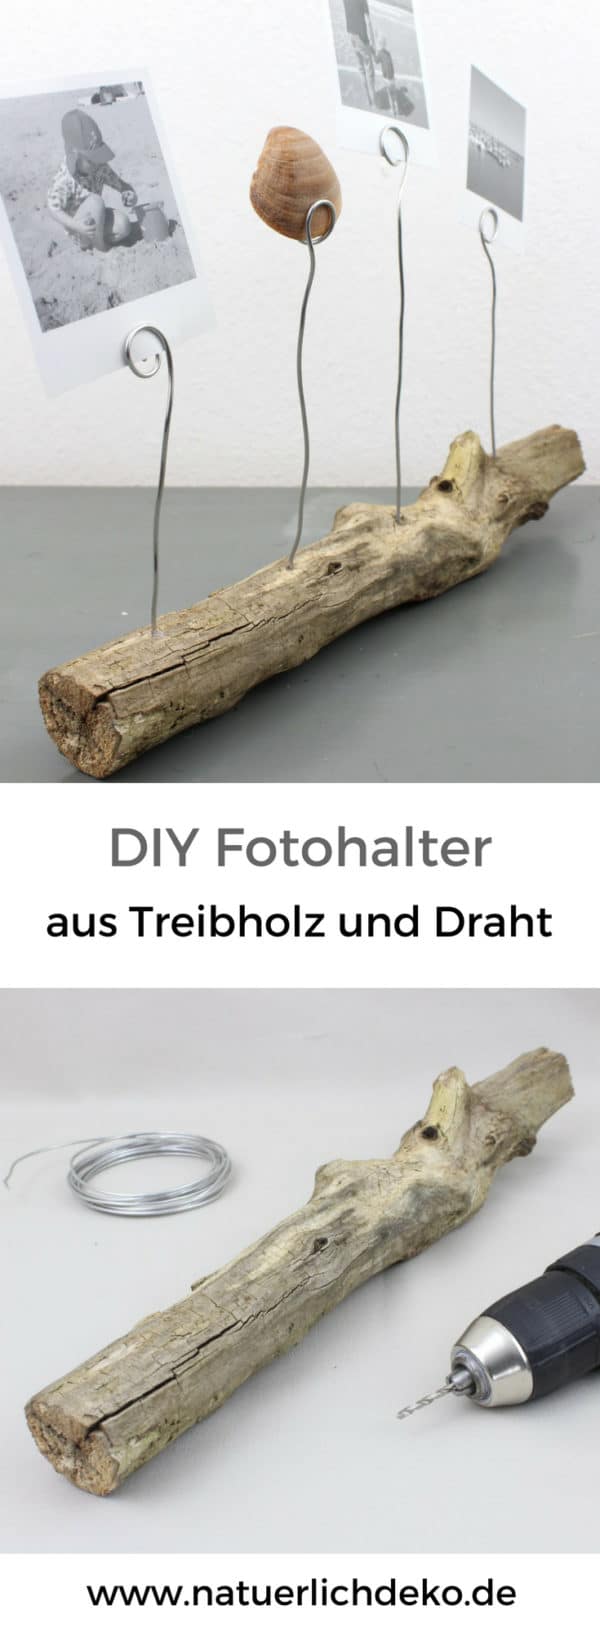 DIY Fotohalter aus Treibholz